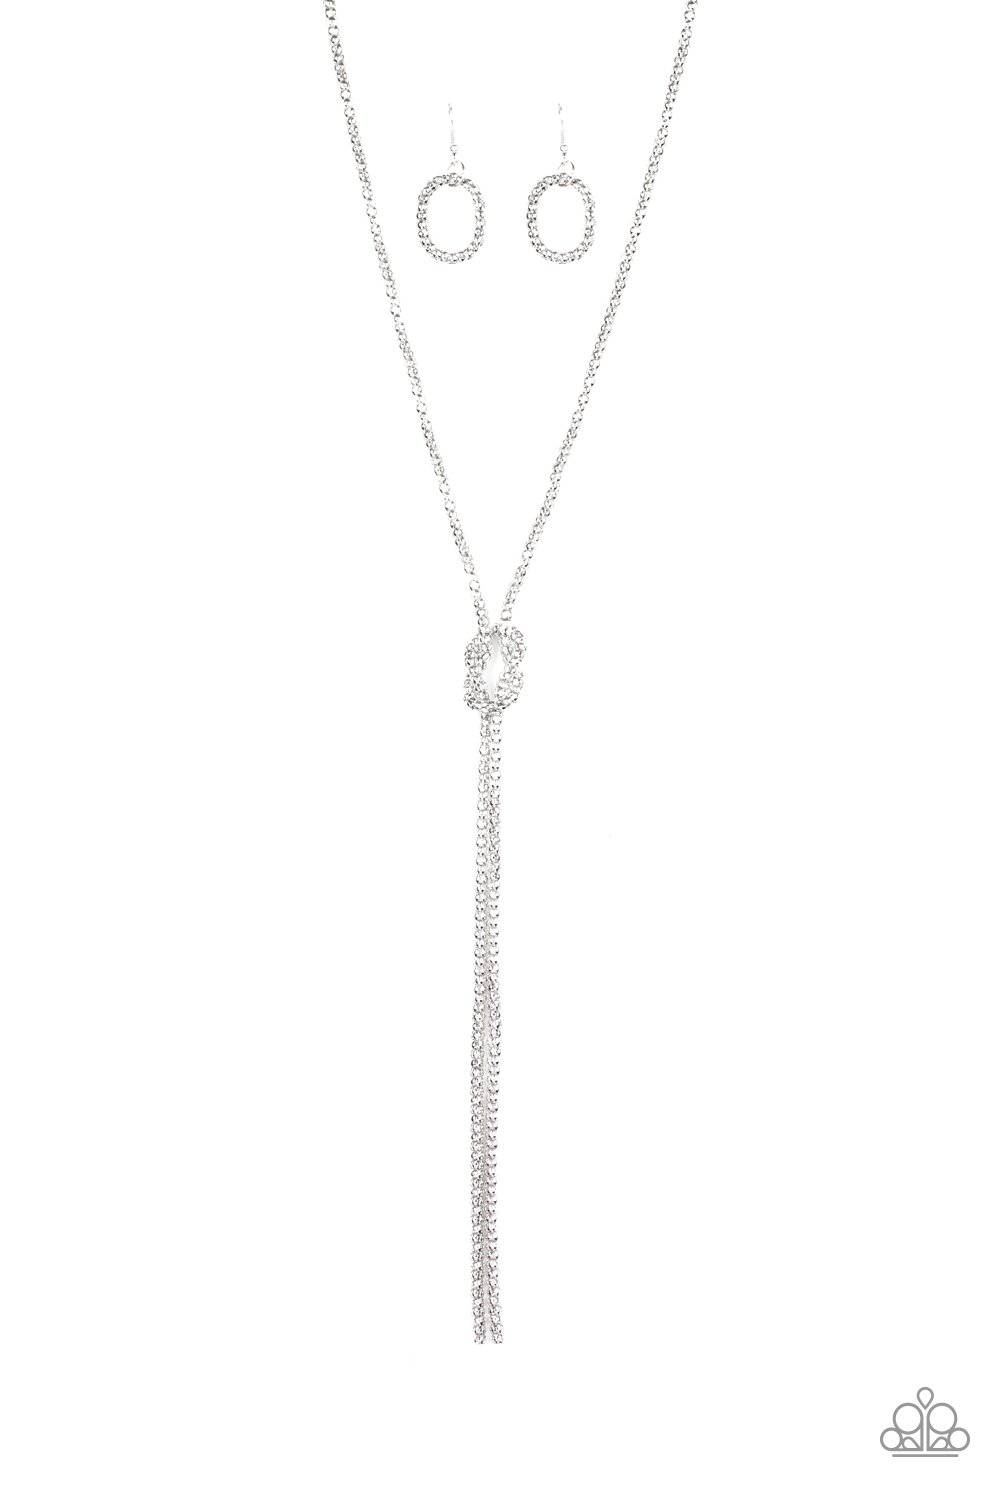 Born Ready - Silver Necklace - Paparazzi Accessories - GlaMarous Titi Jewels